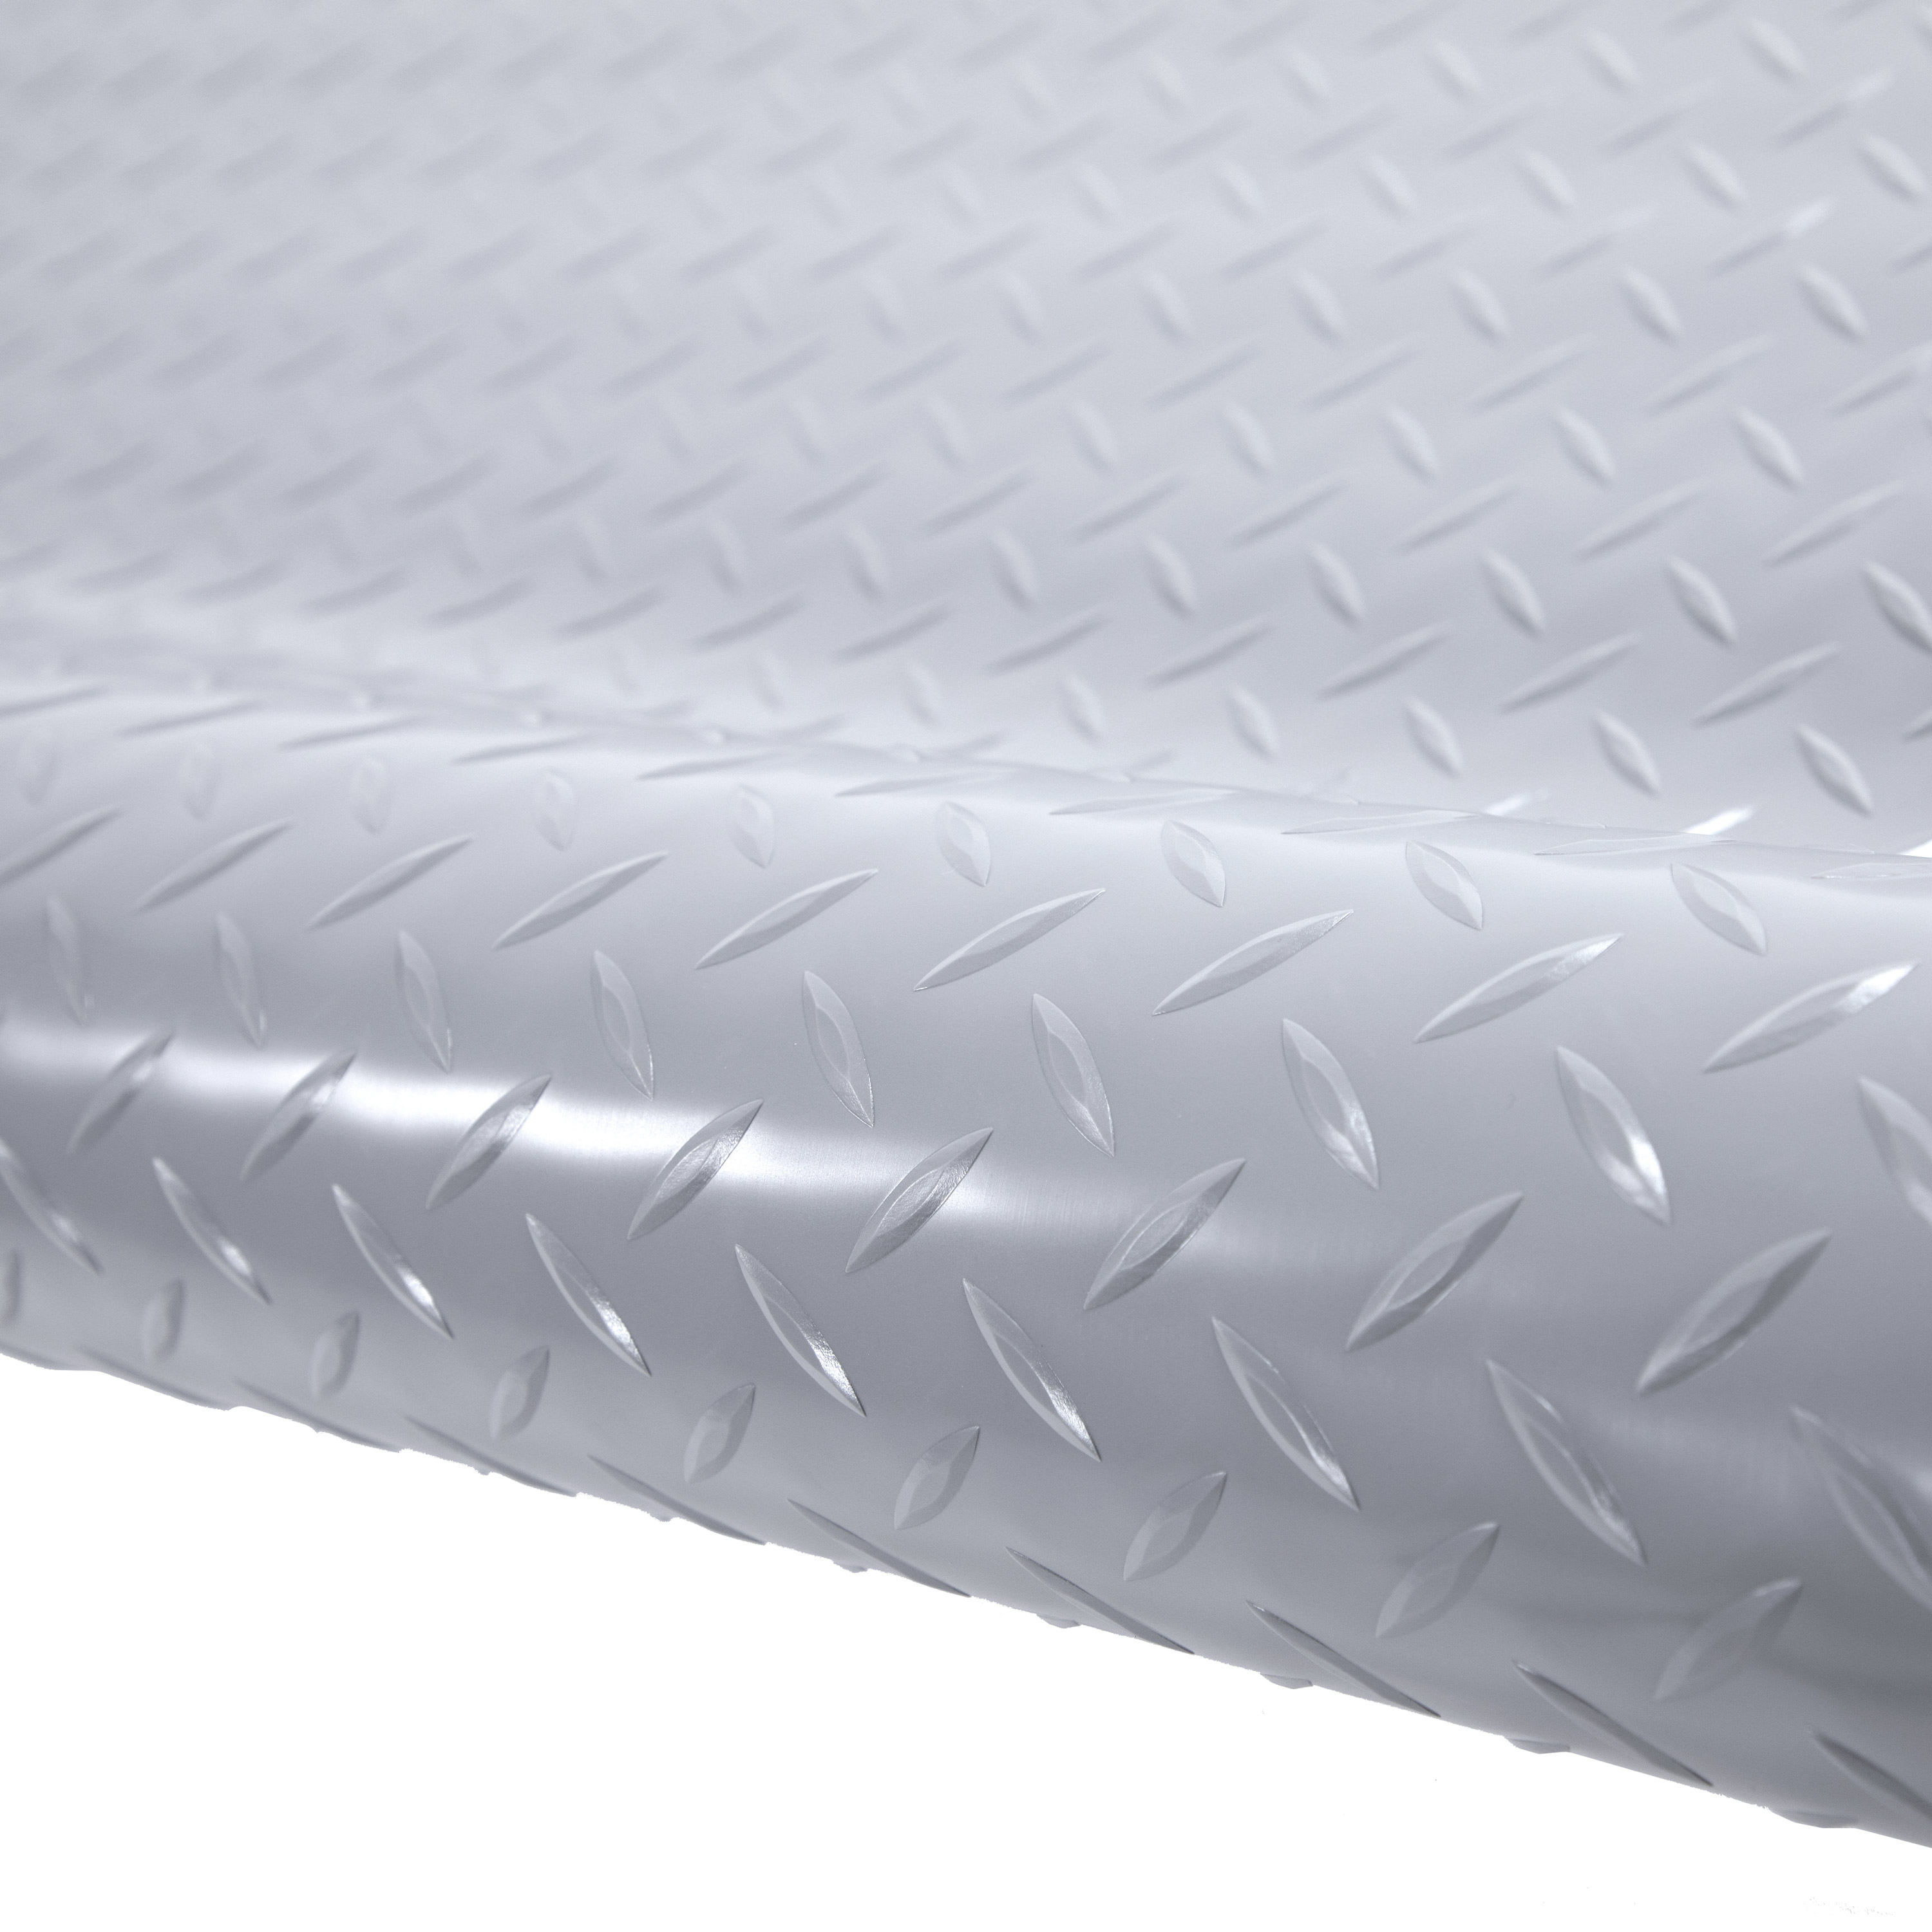 FlooringInc Standard Grade Nitro Garage Roll & Protective Parking Mats, Stailess Steel, Diamond, 5'x17' Flooring Materials - image 1 of 10